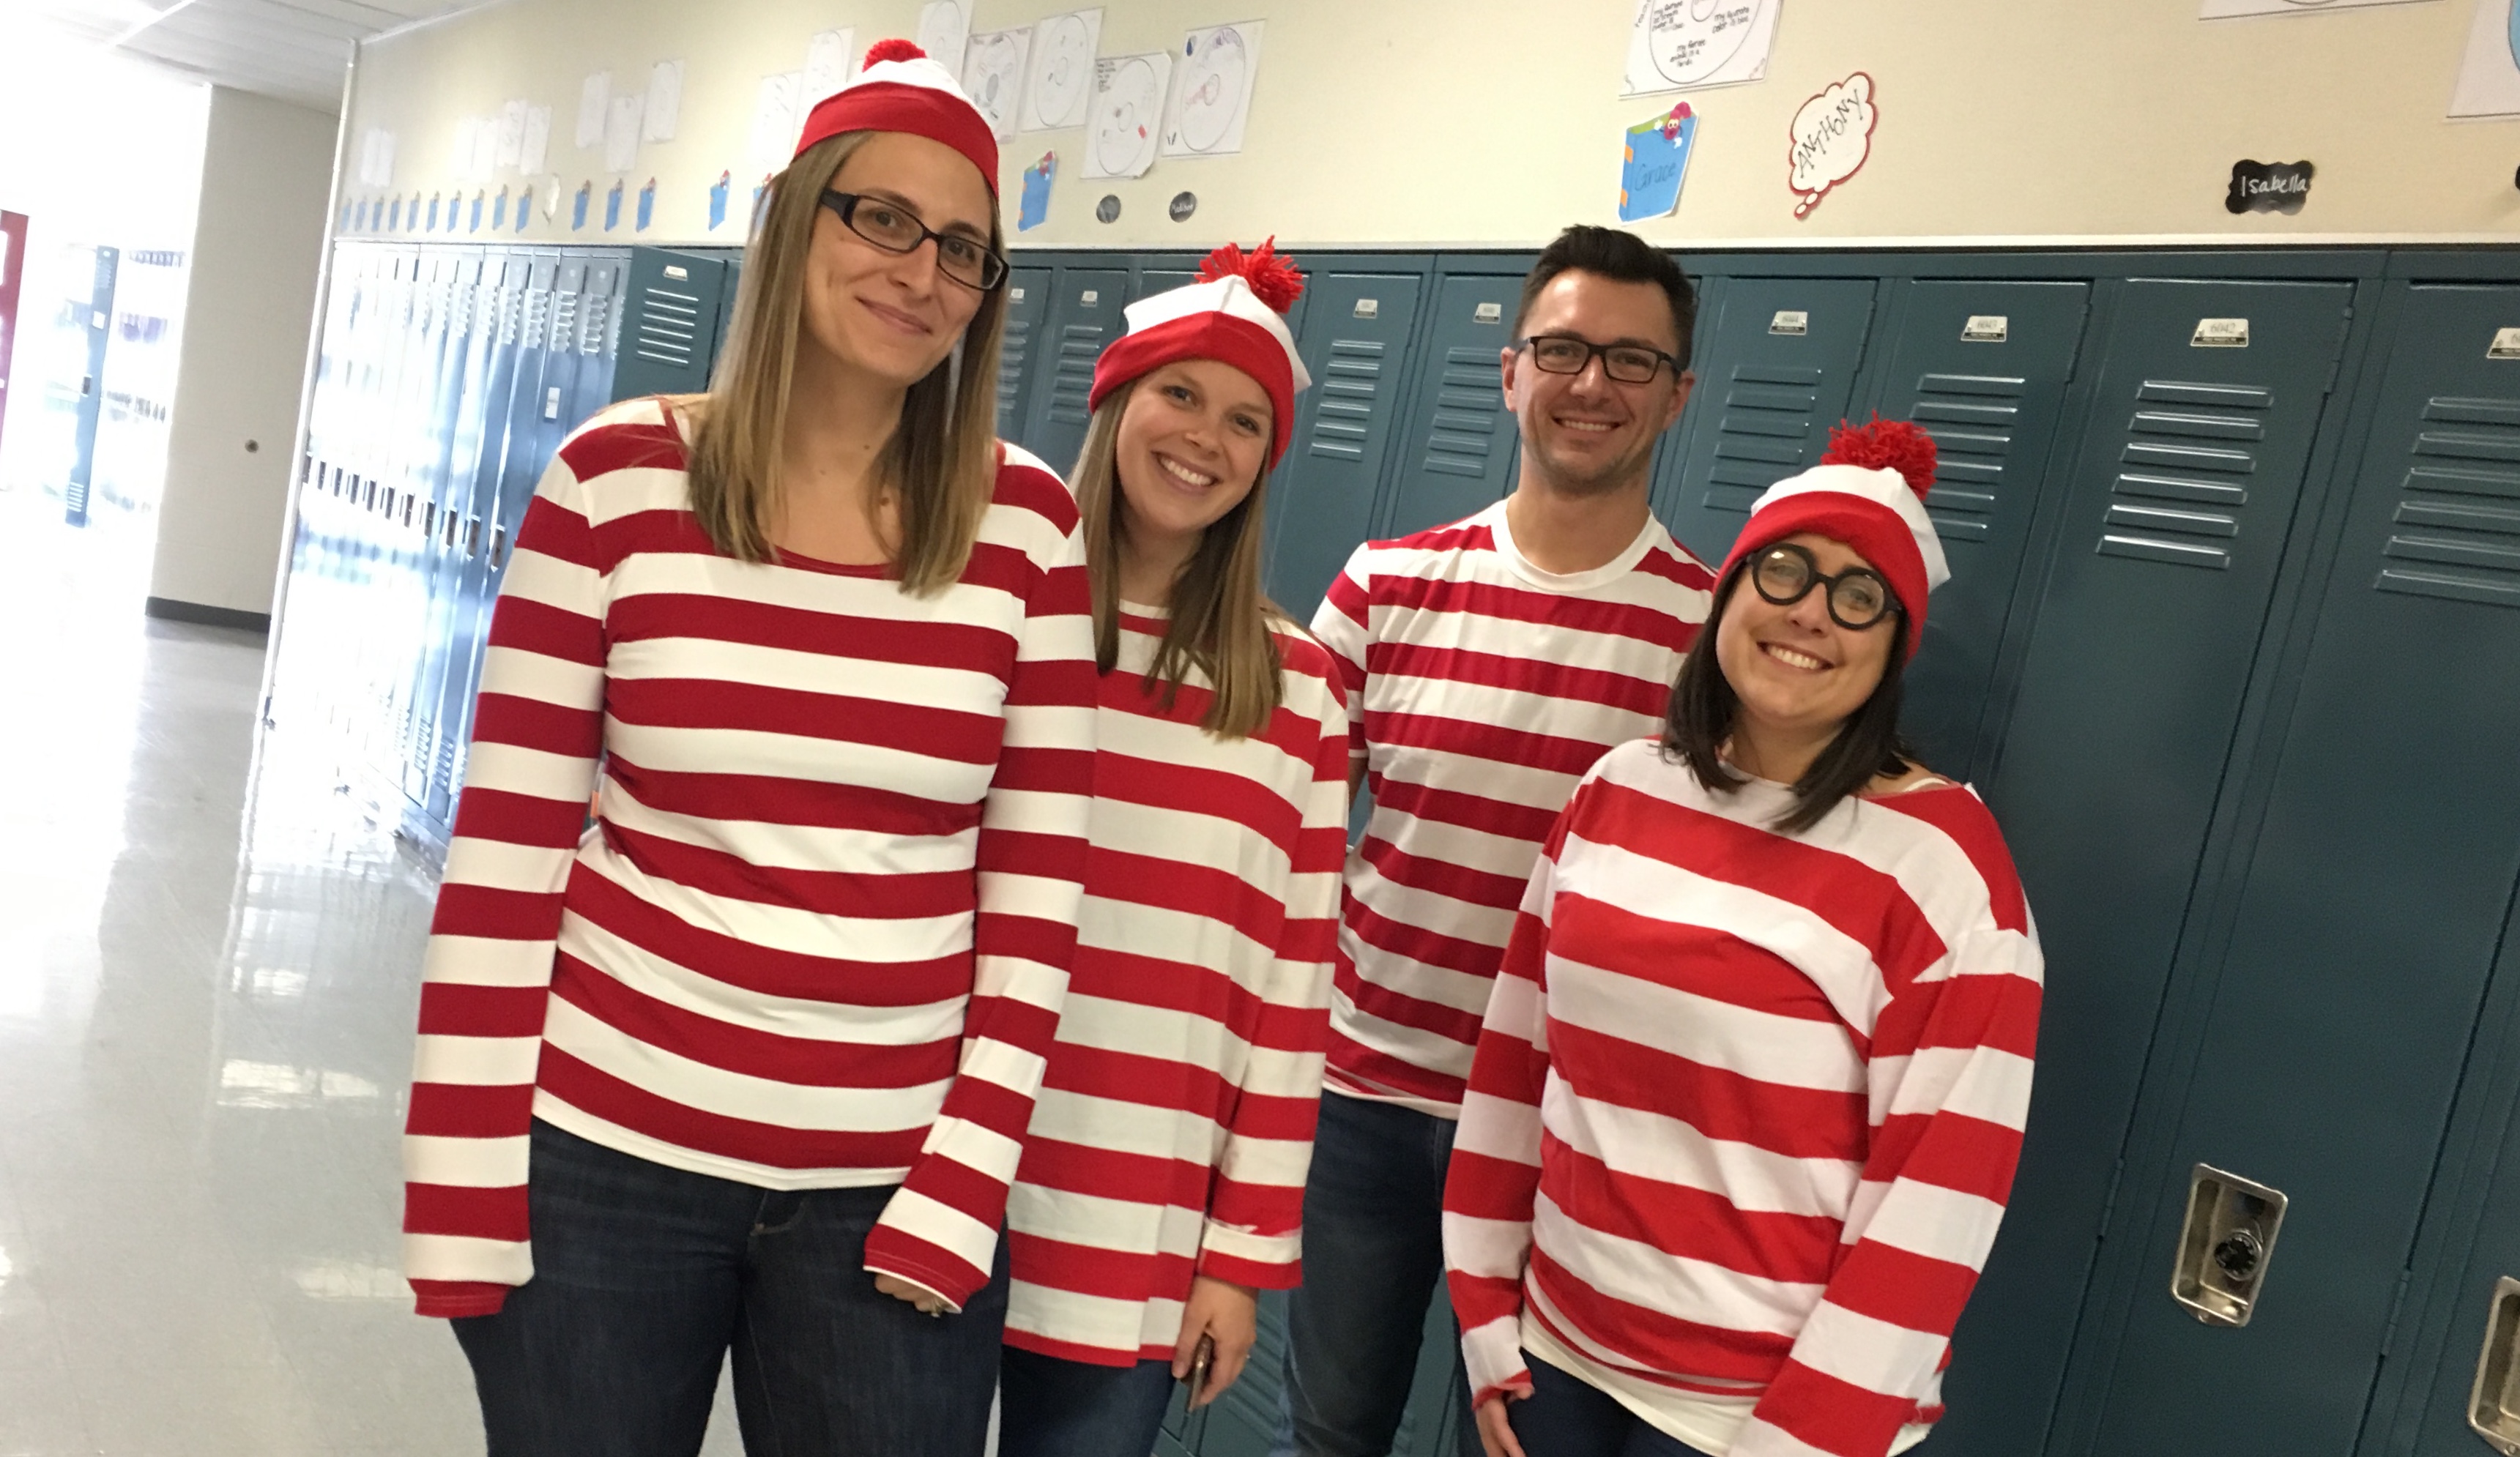 Teachers dressed as Waldo